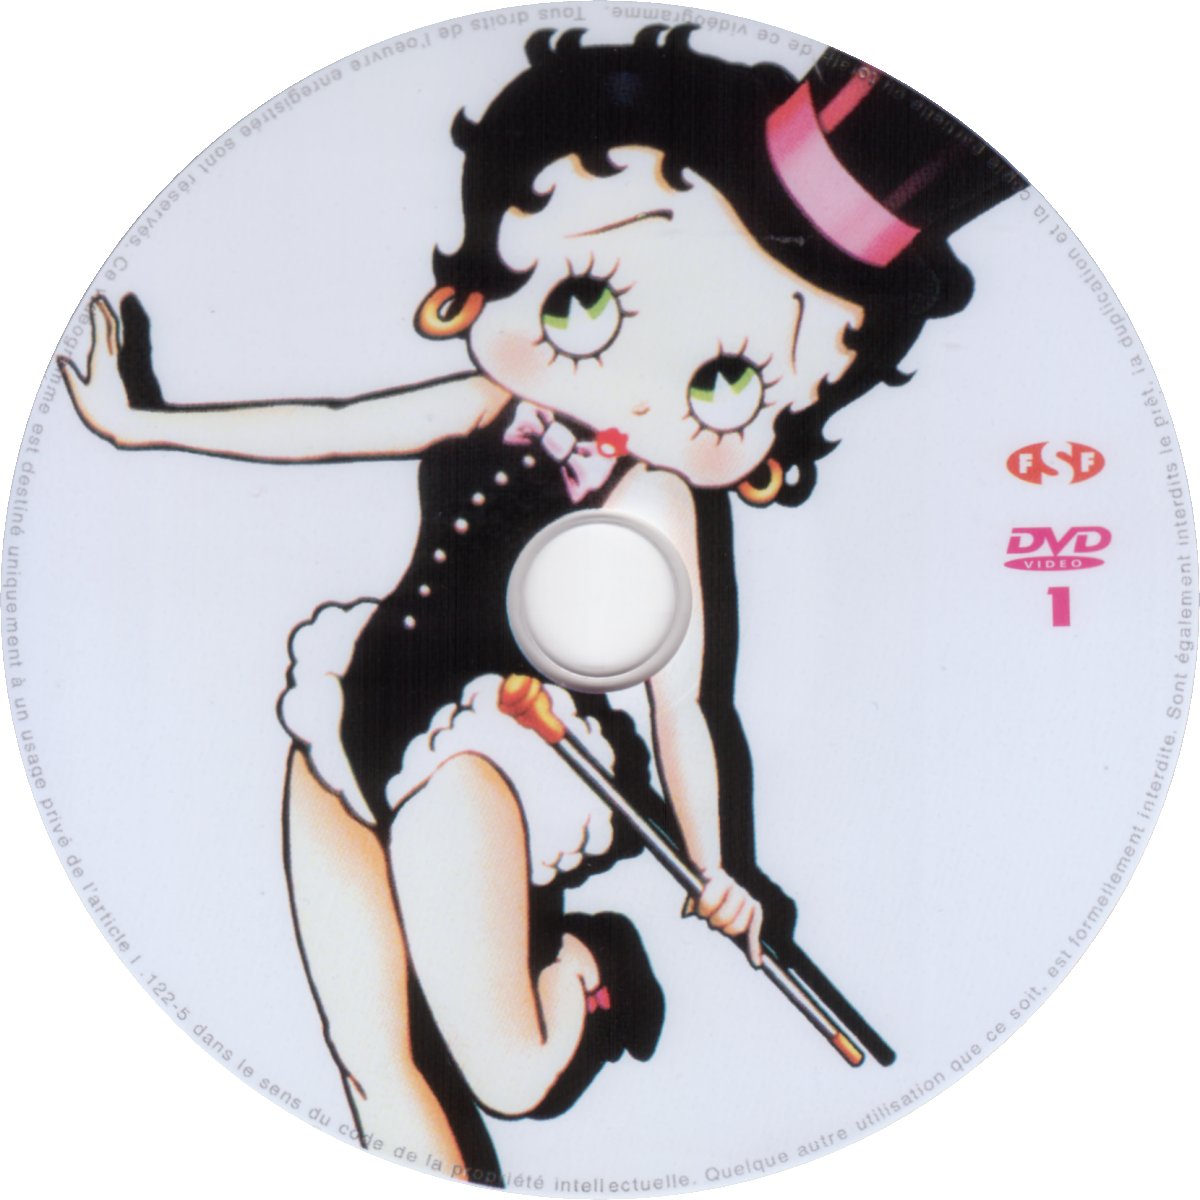 Betty Boop - DVD 1